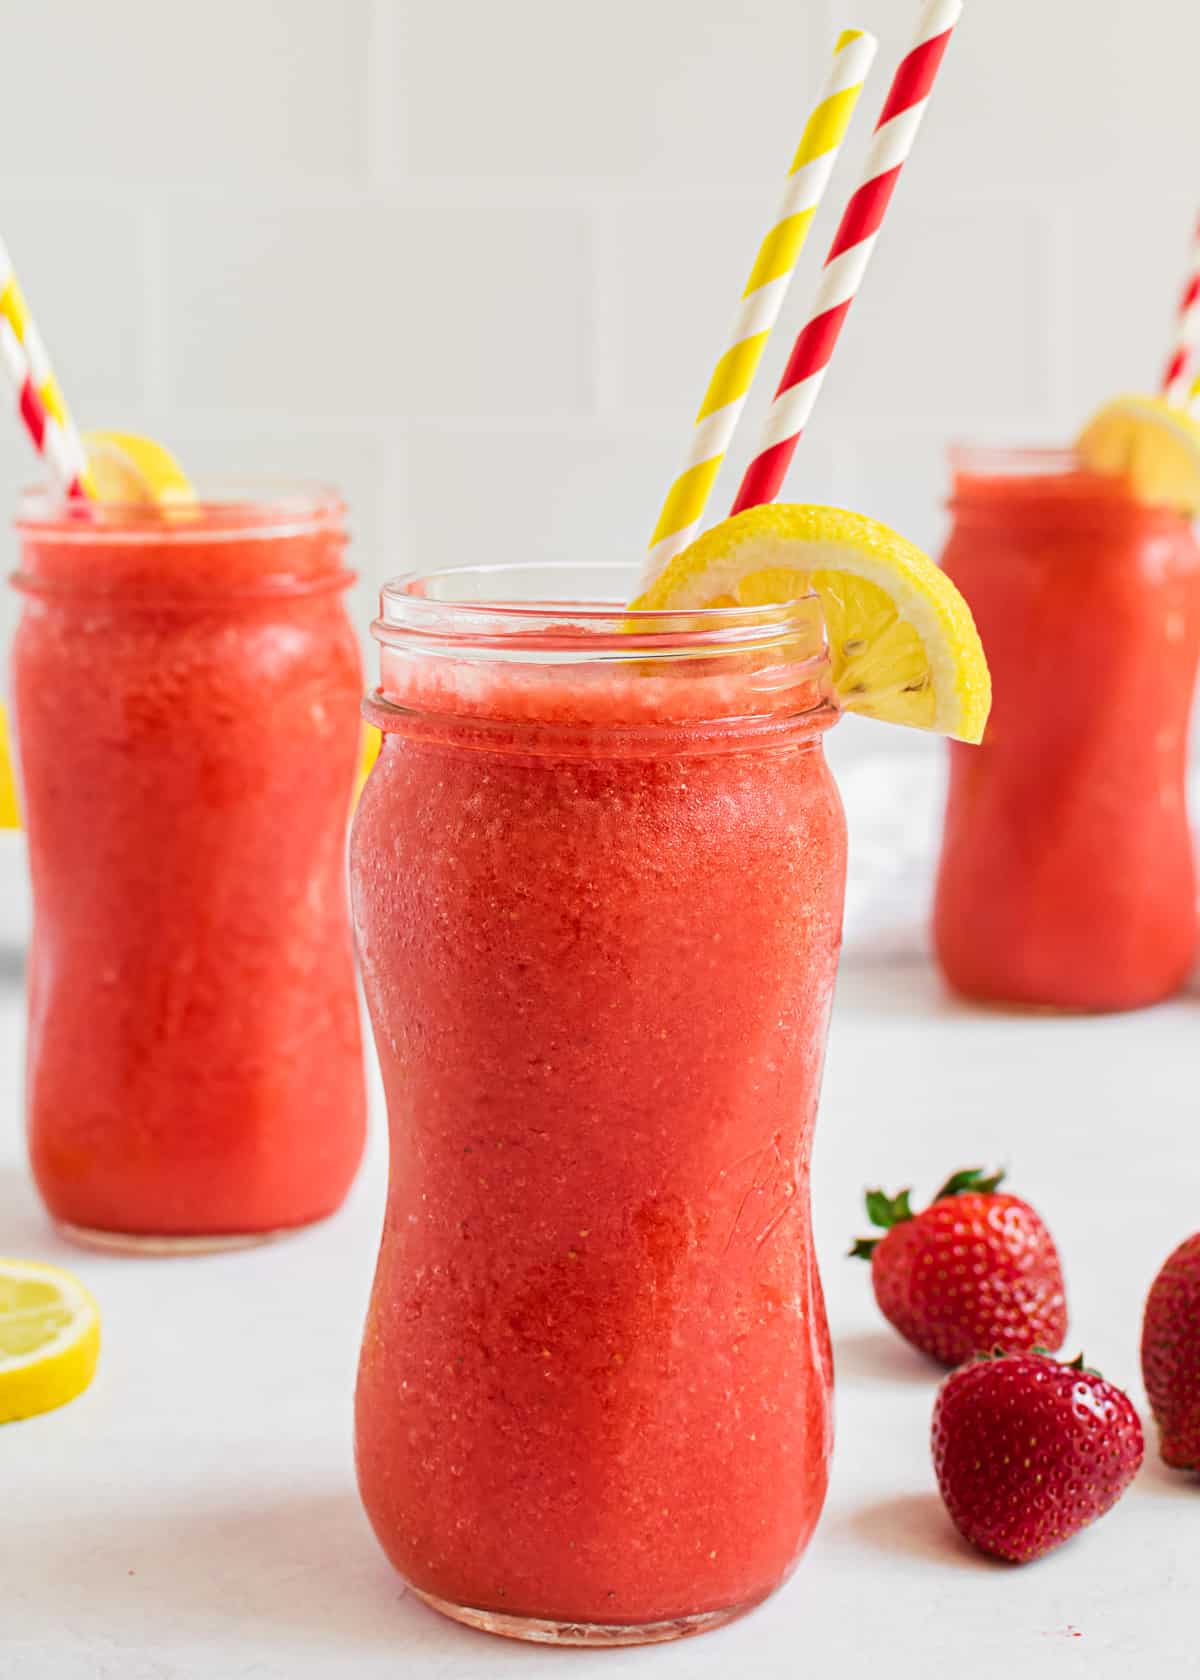 Frozen strawberry lemonade in glasses.